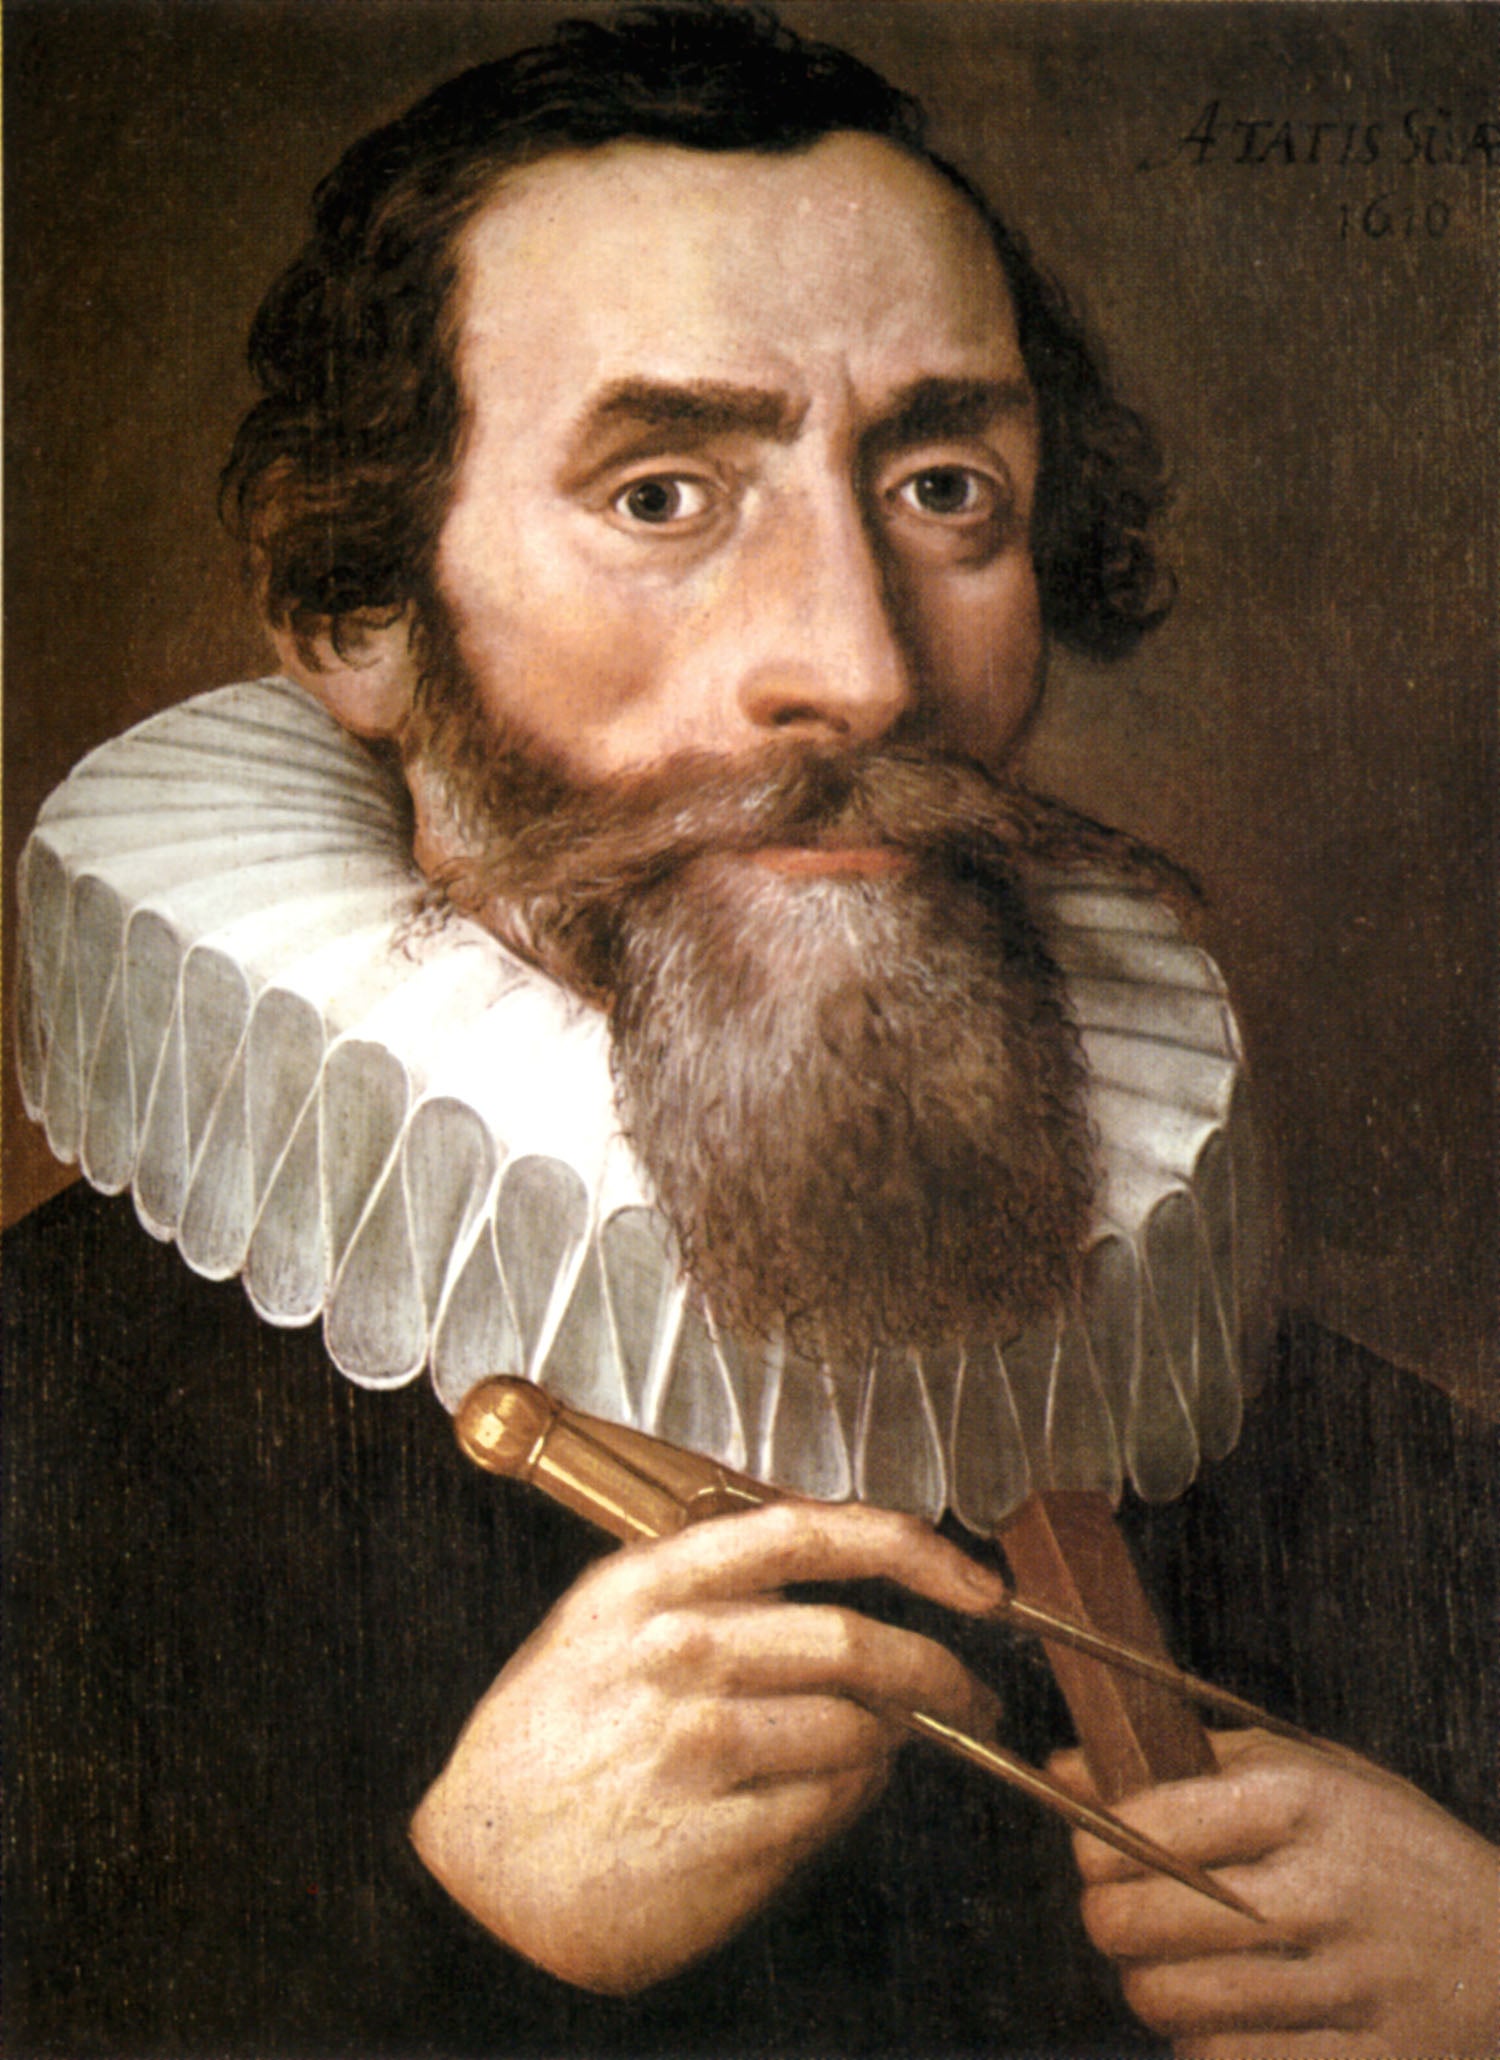 1610 portrait of Johannes Kepler by an unknown artist. (Image: Public Domain)